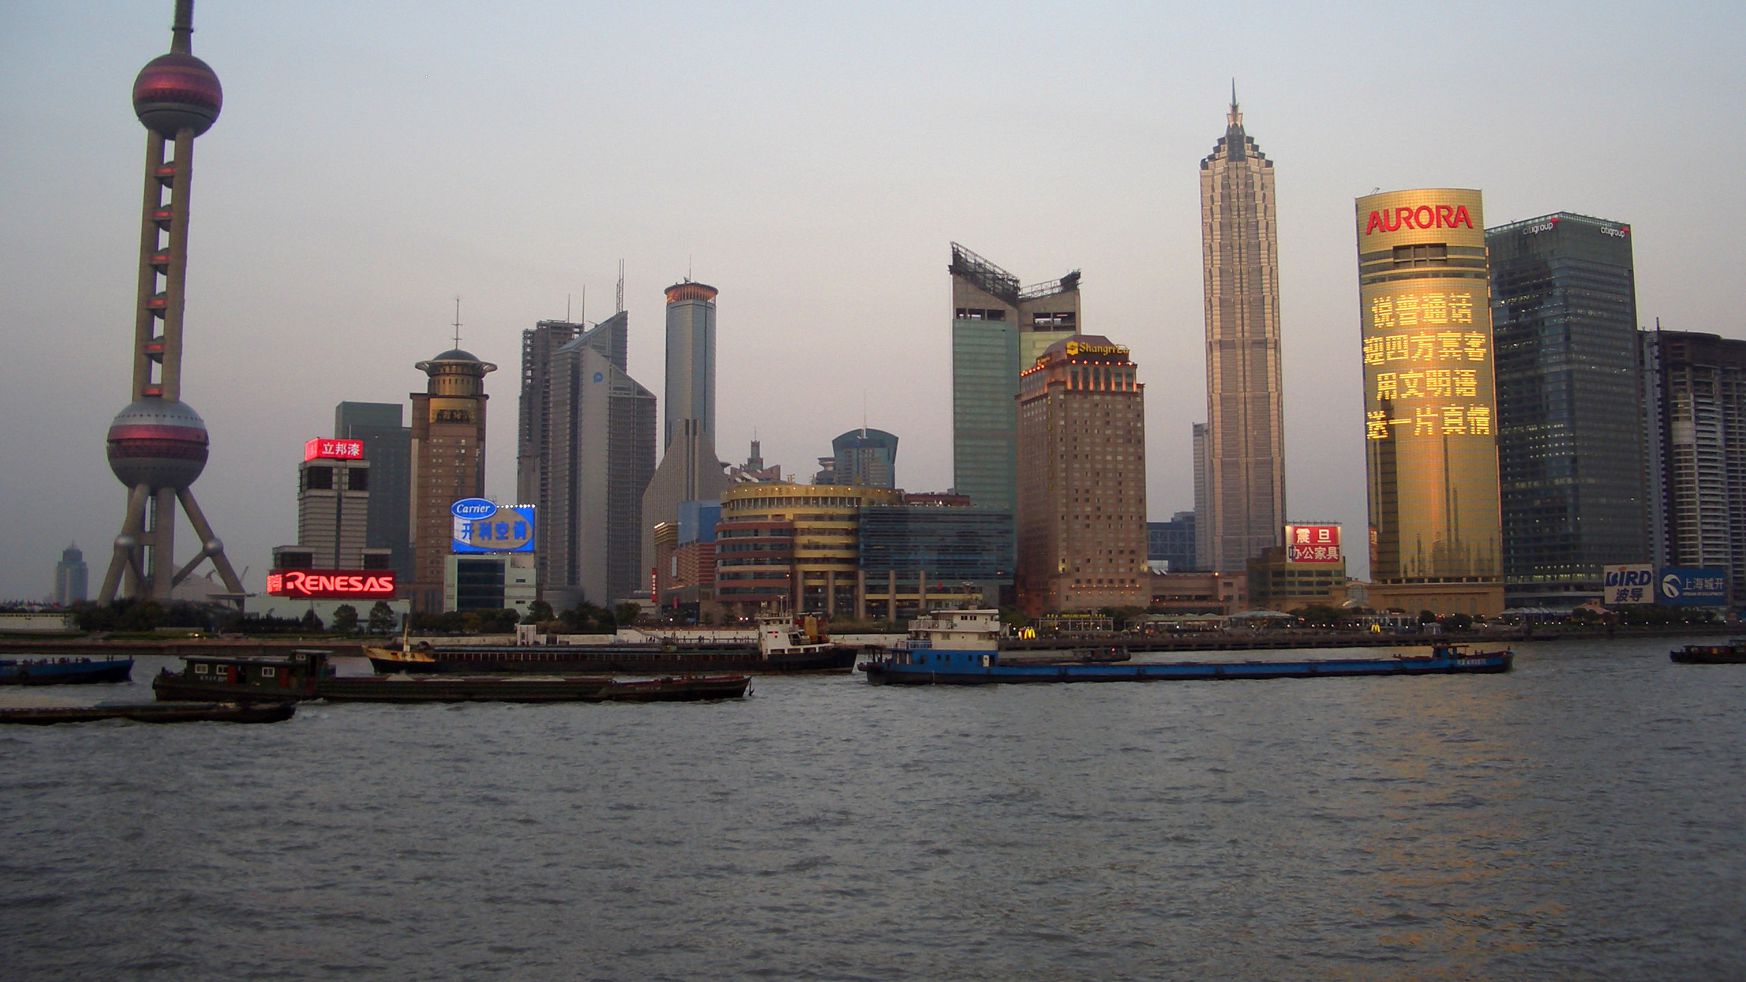 Fuller Skyline of Pudong, Shanghai, China.